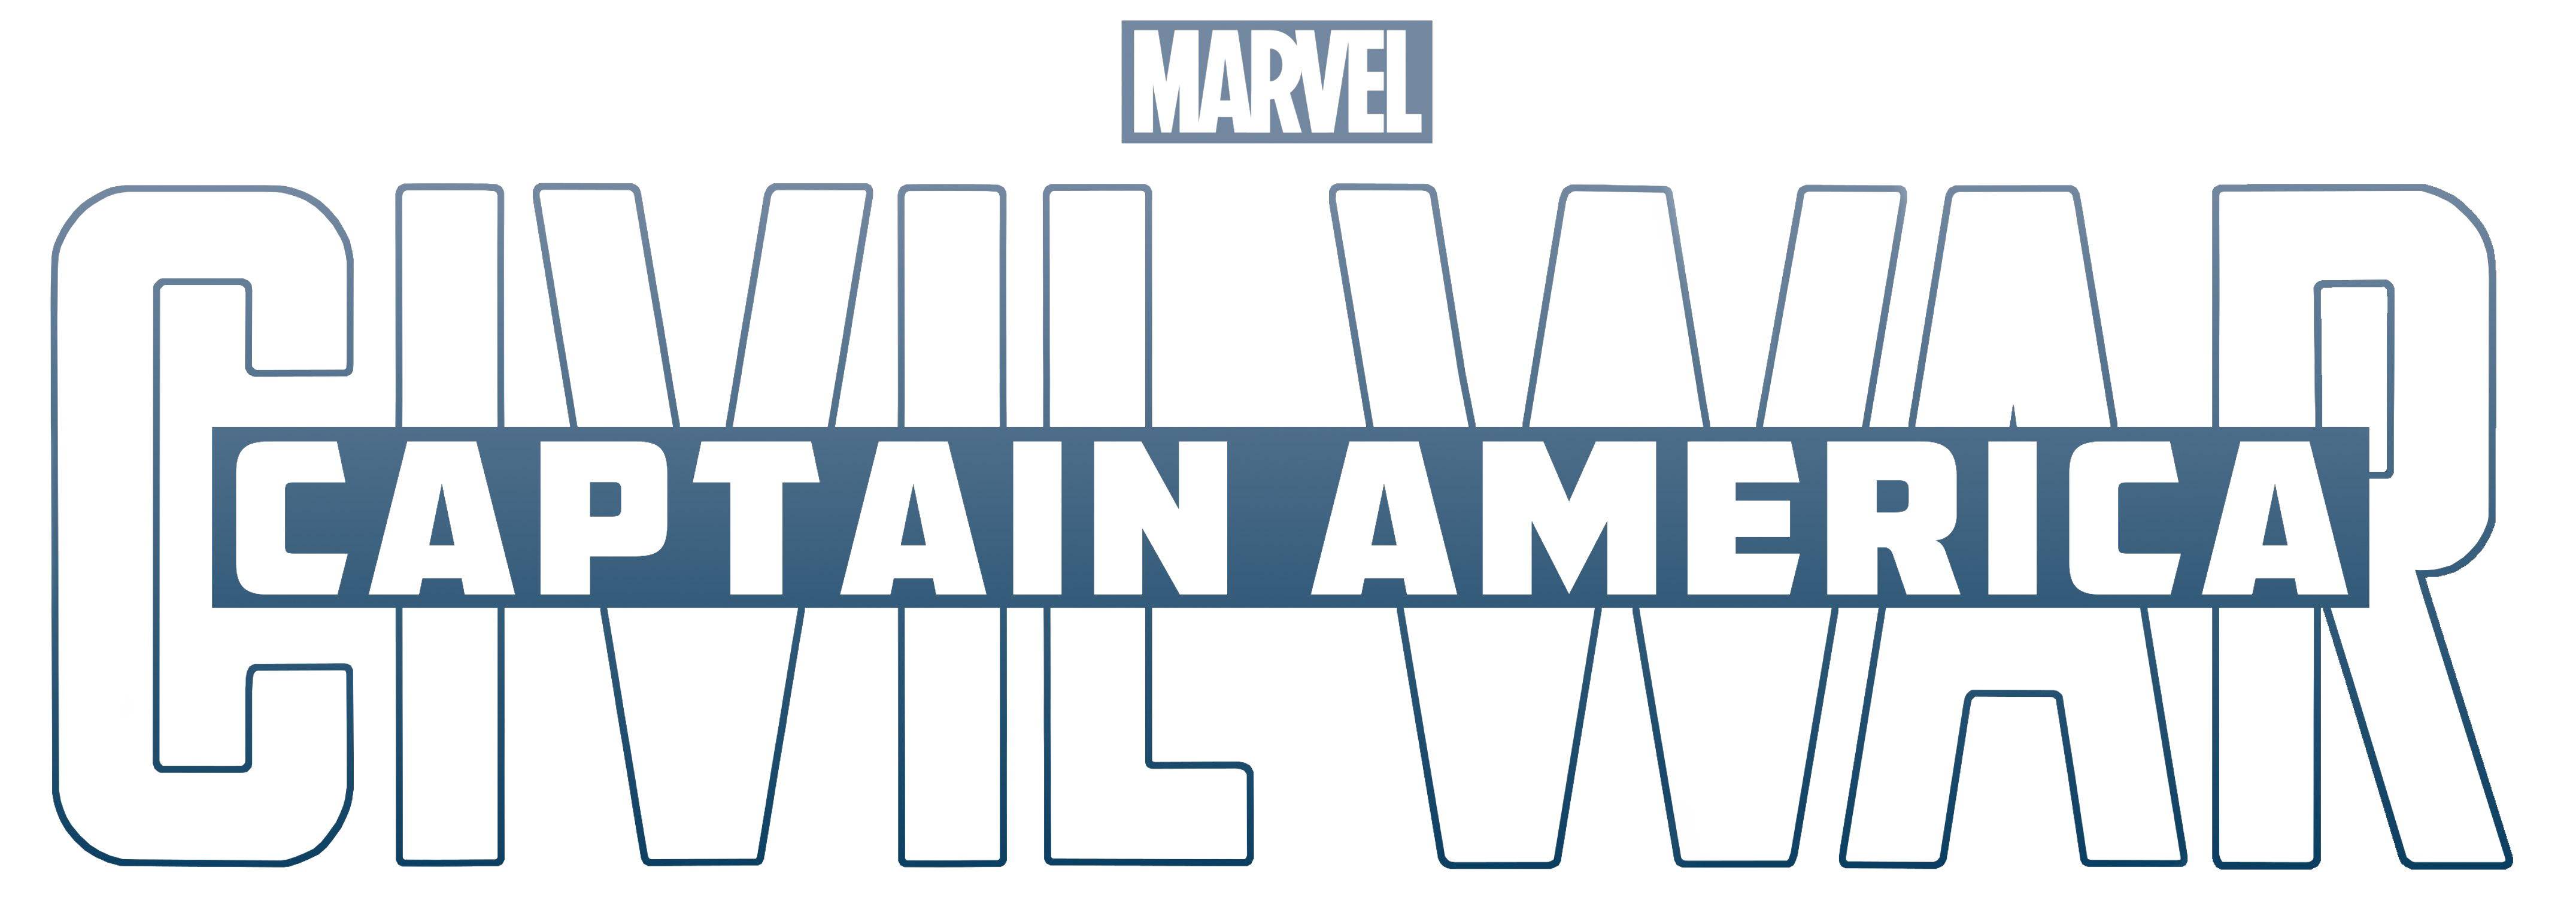 Marvel Captain America juble War